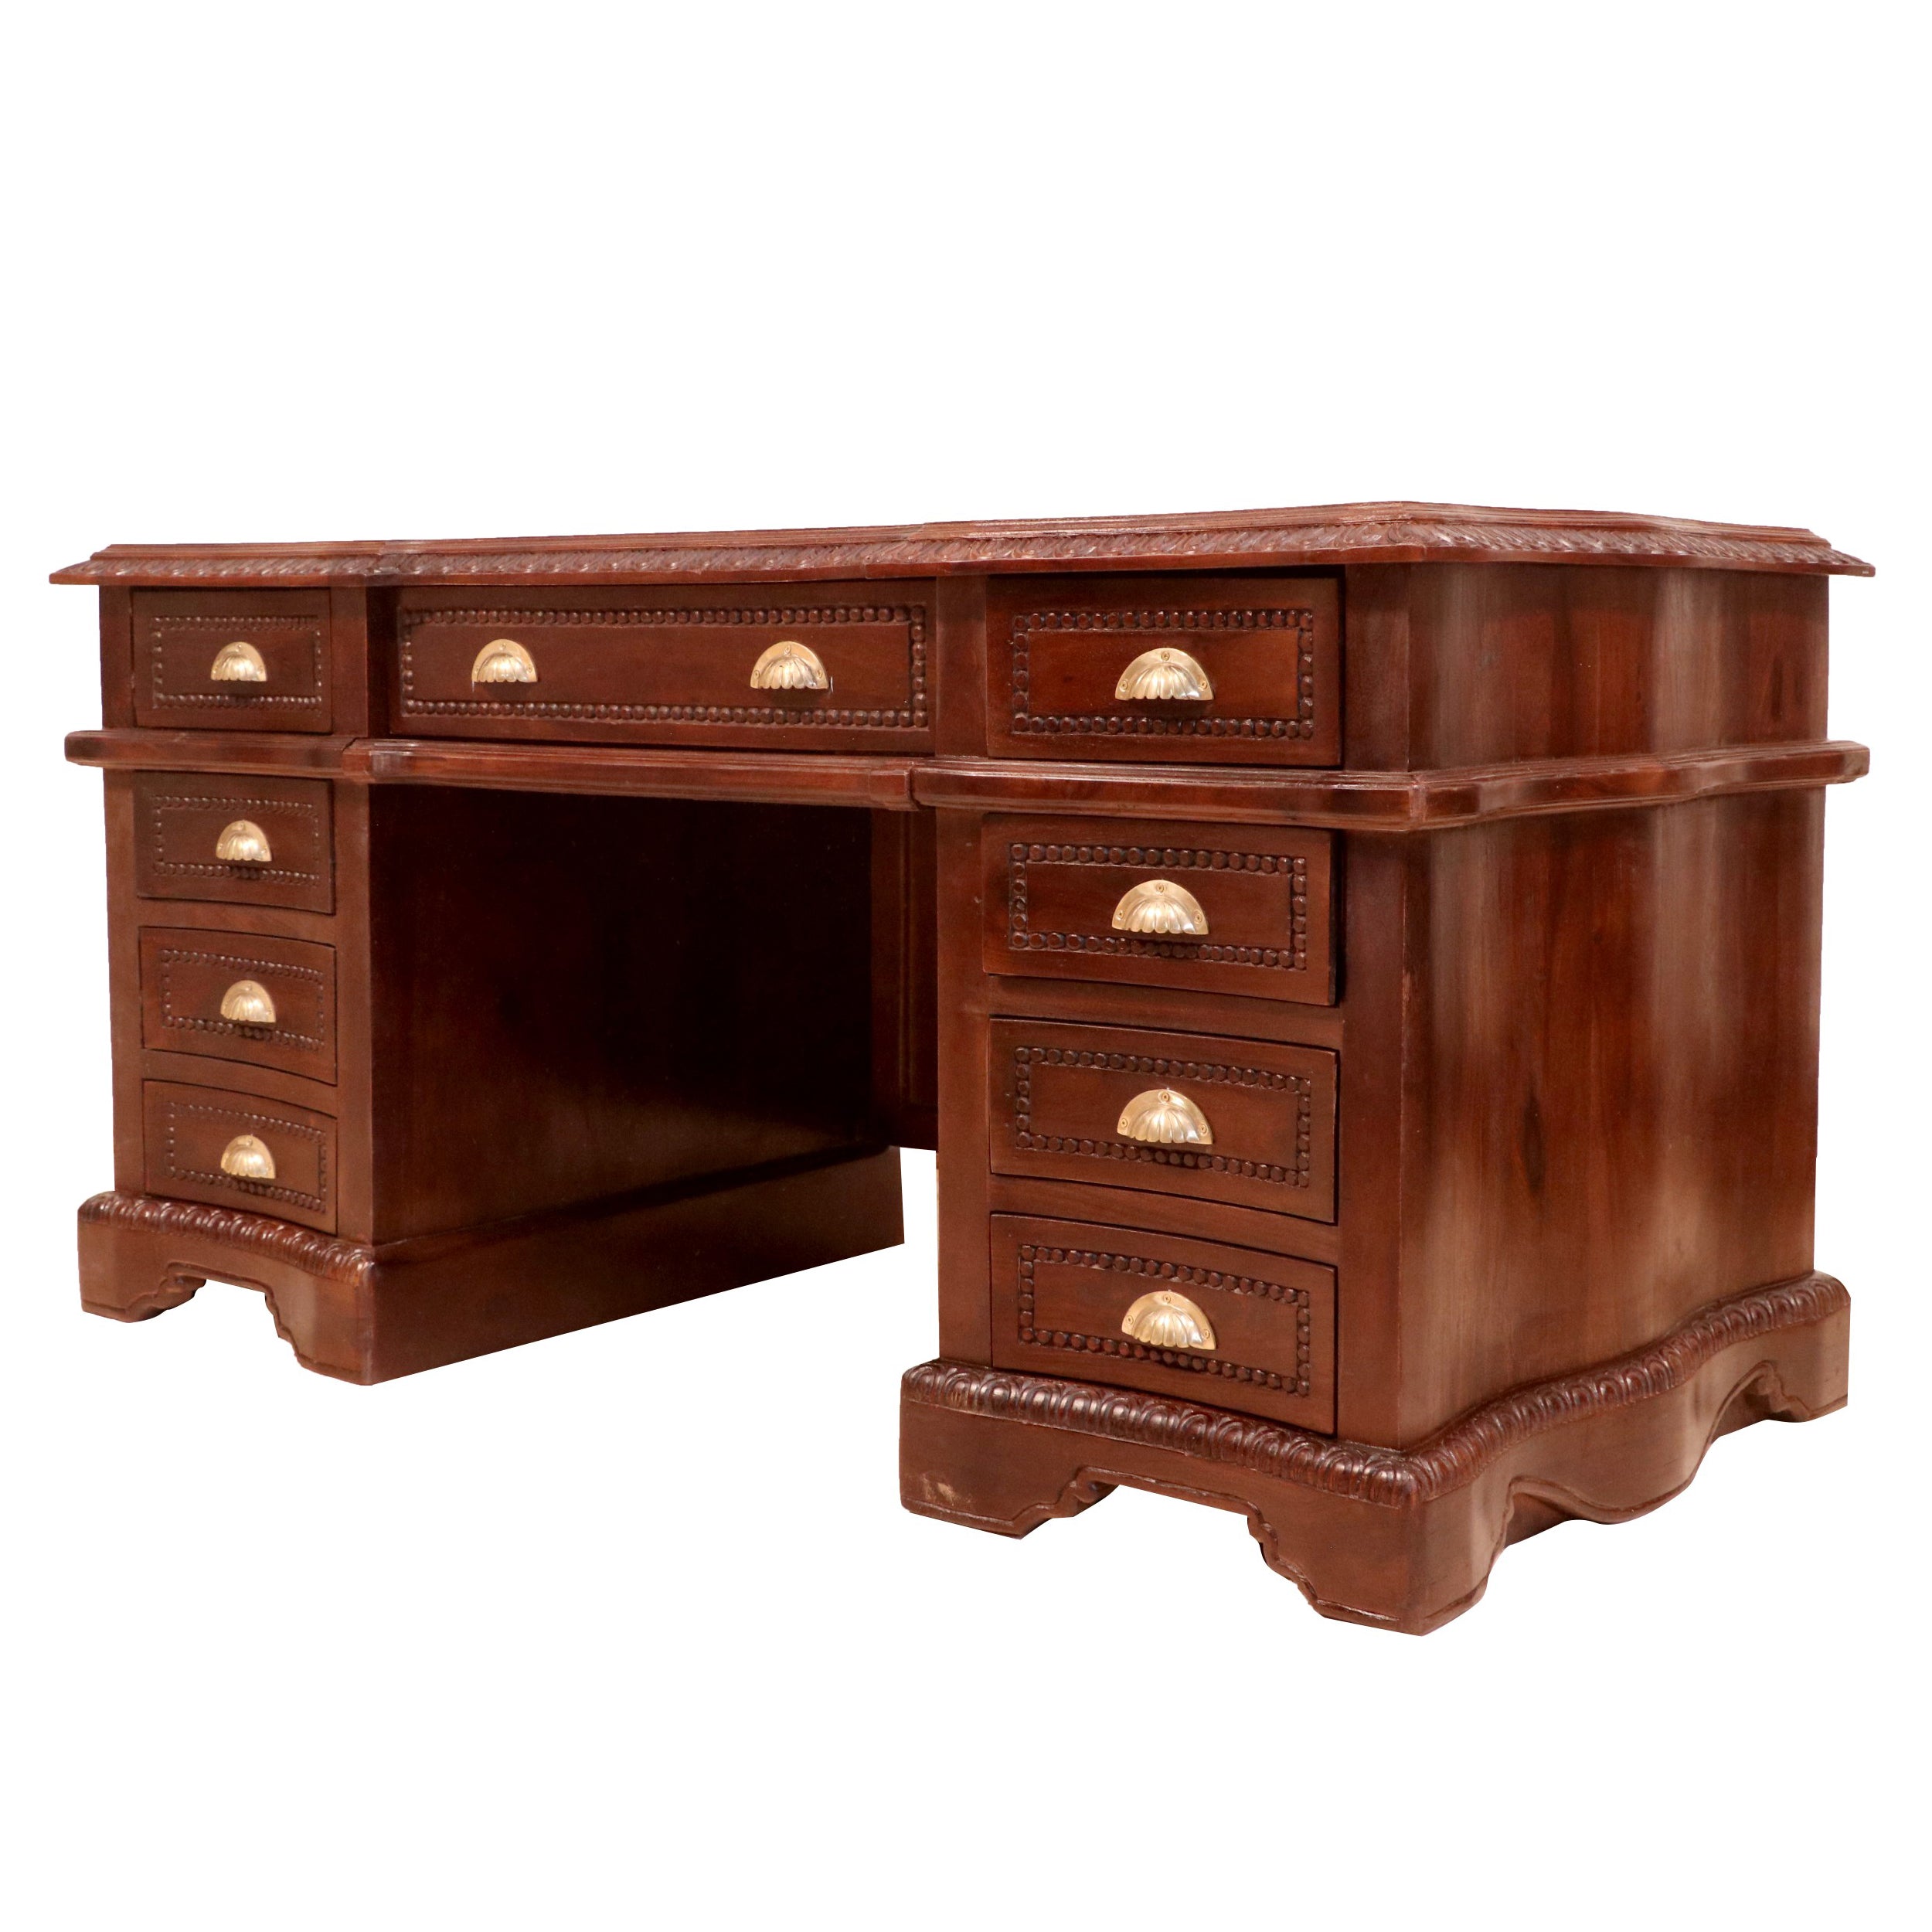 Teak polished Sturdy Wooden Royal Office Desk Study Table